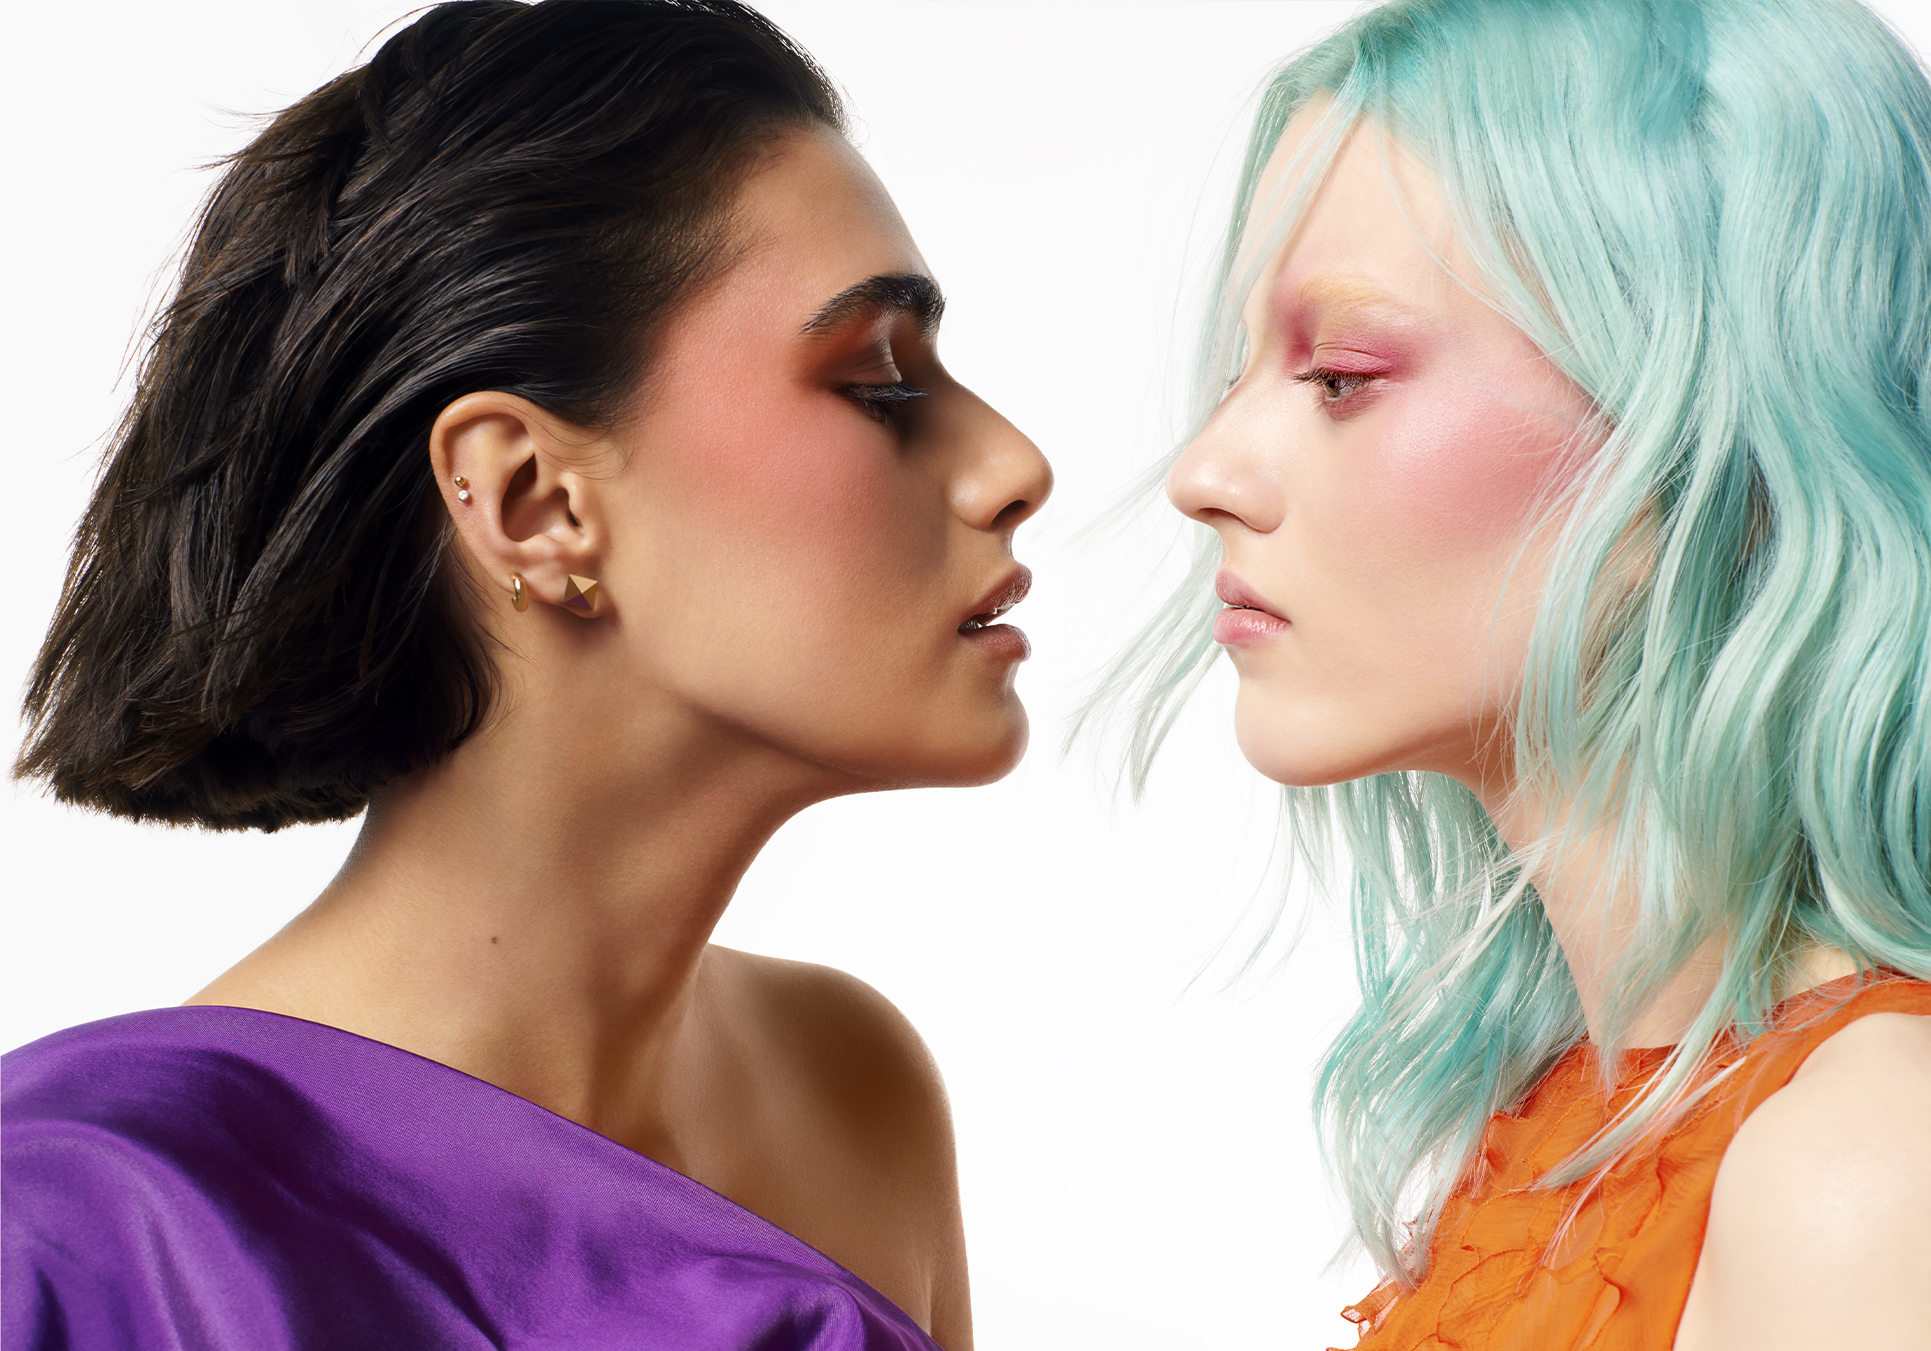 CARLA COSTE / Art Director + Image Maker Valentino Make-up Print Campaign